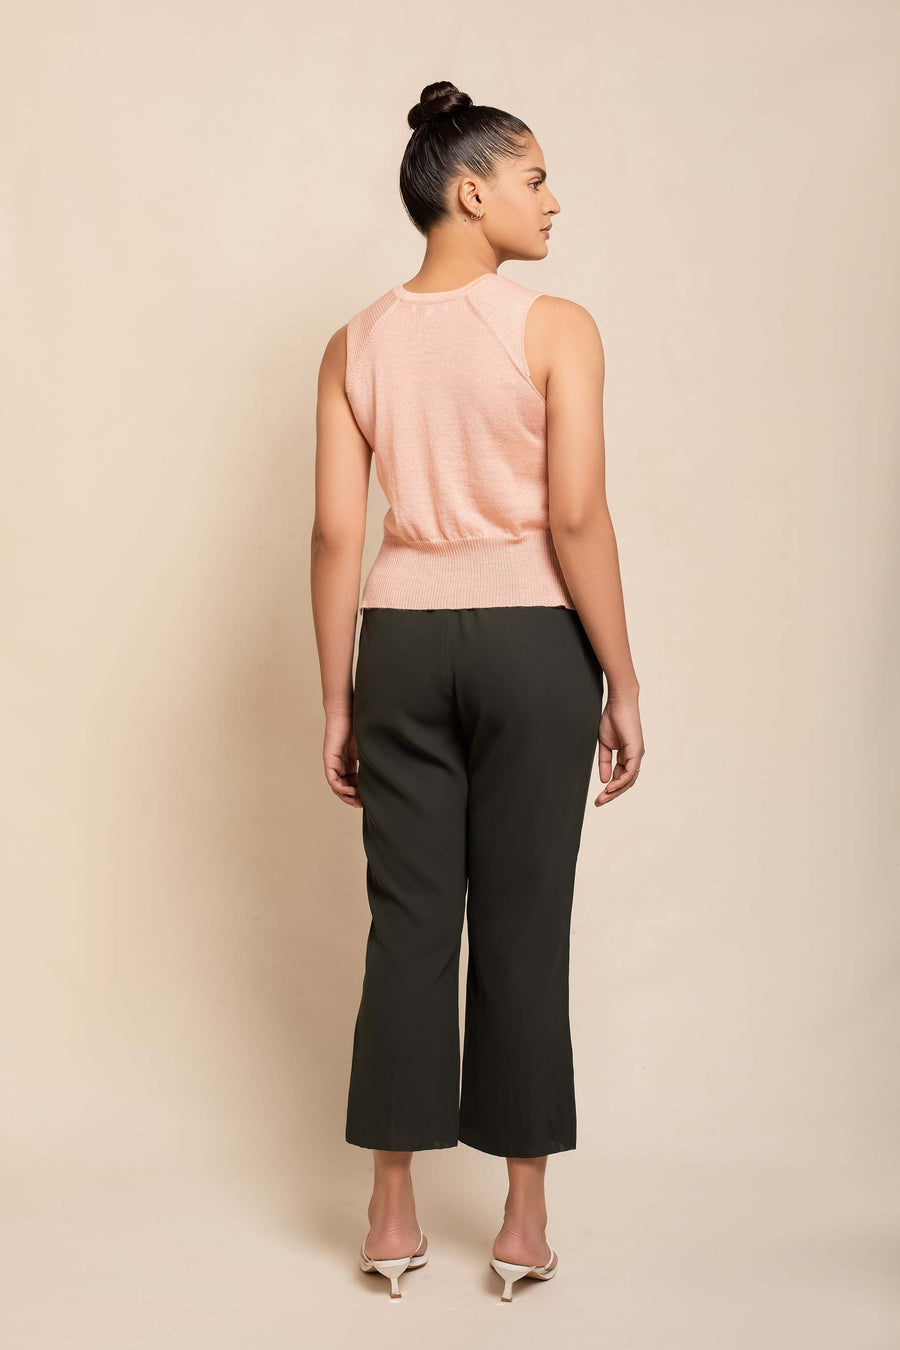 Women's Wool Cashmere Sleeveless Formal Top